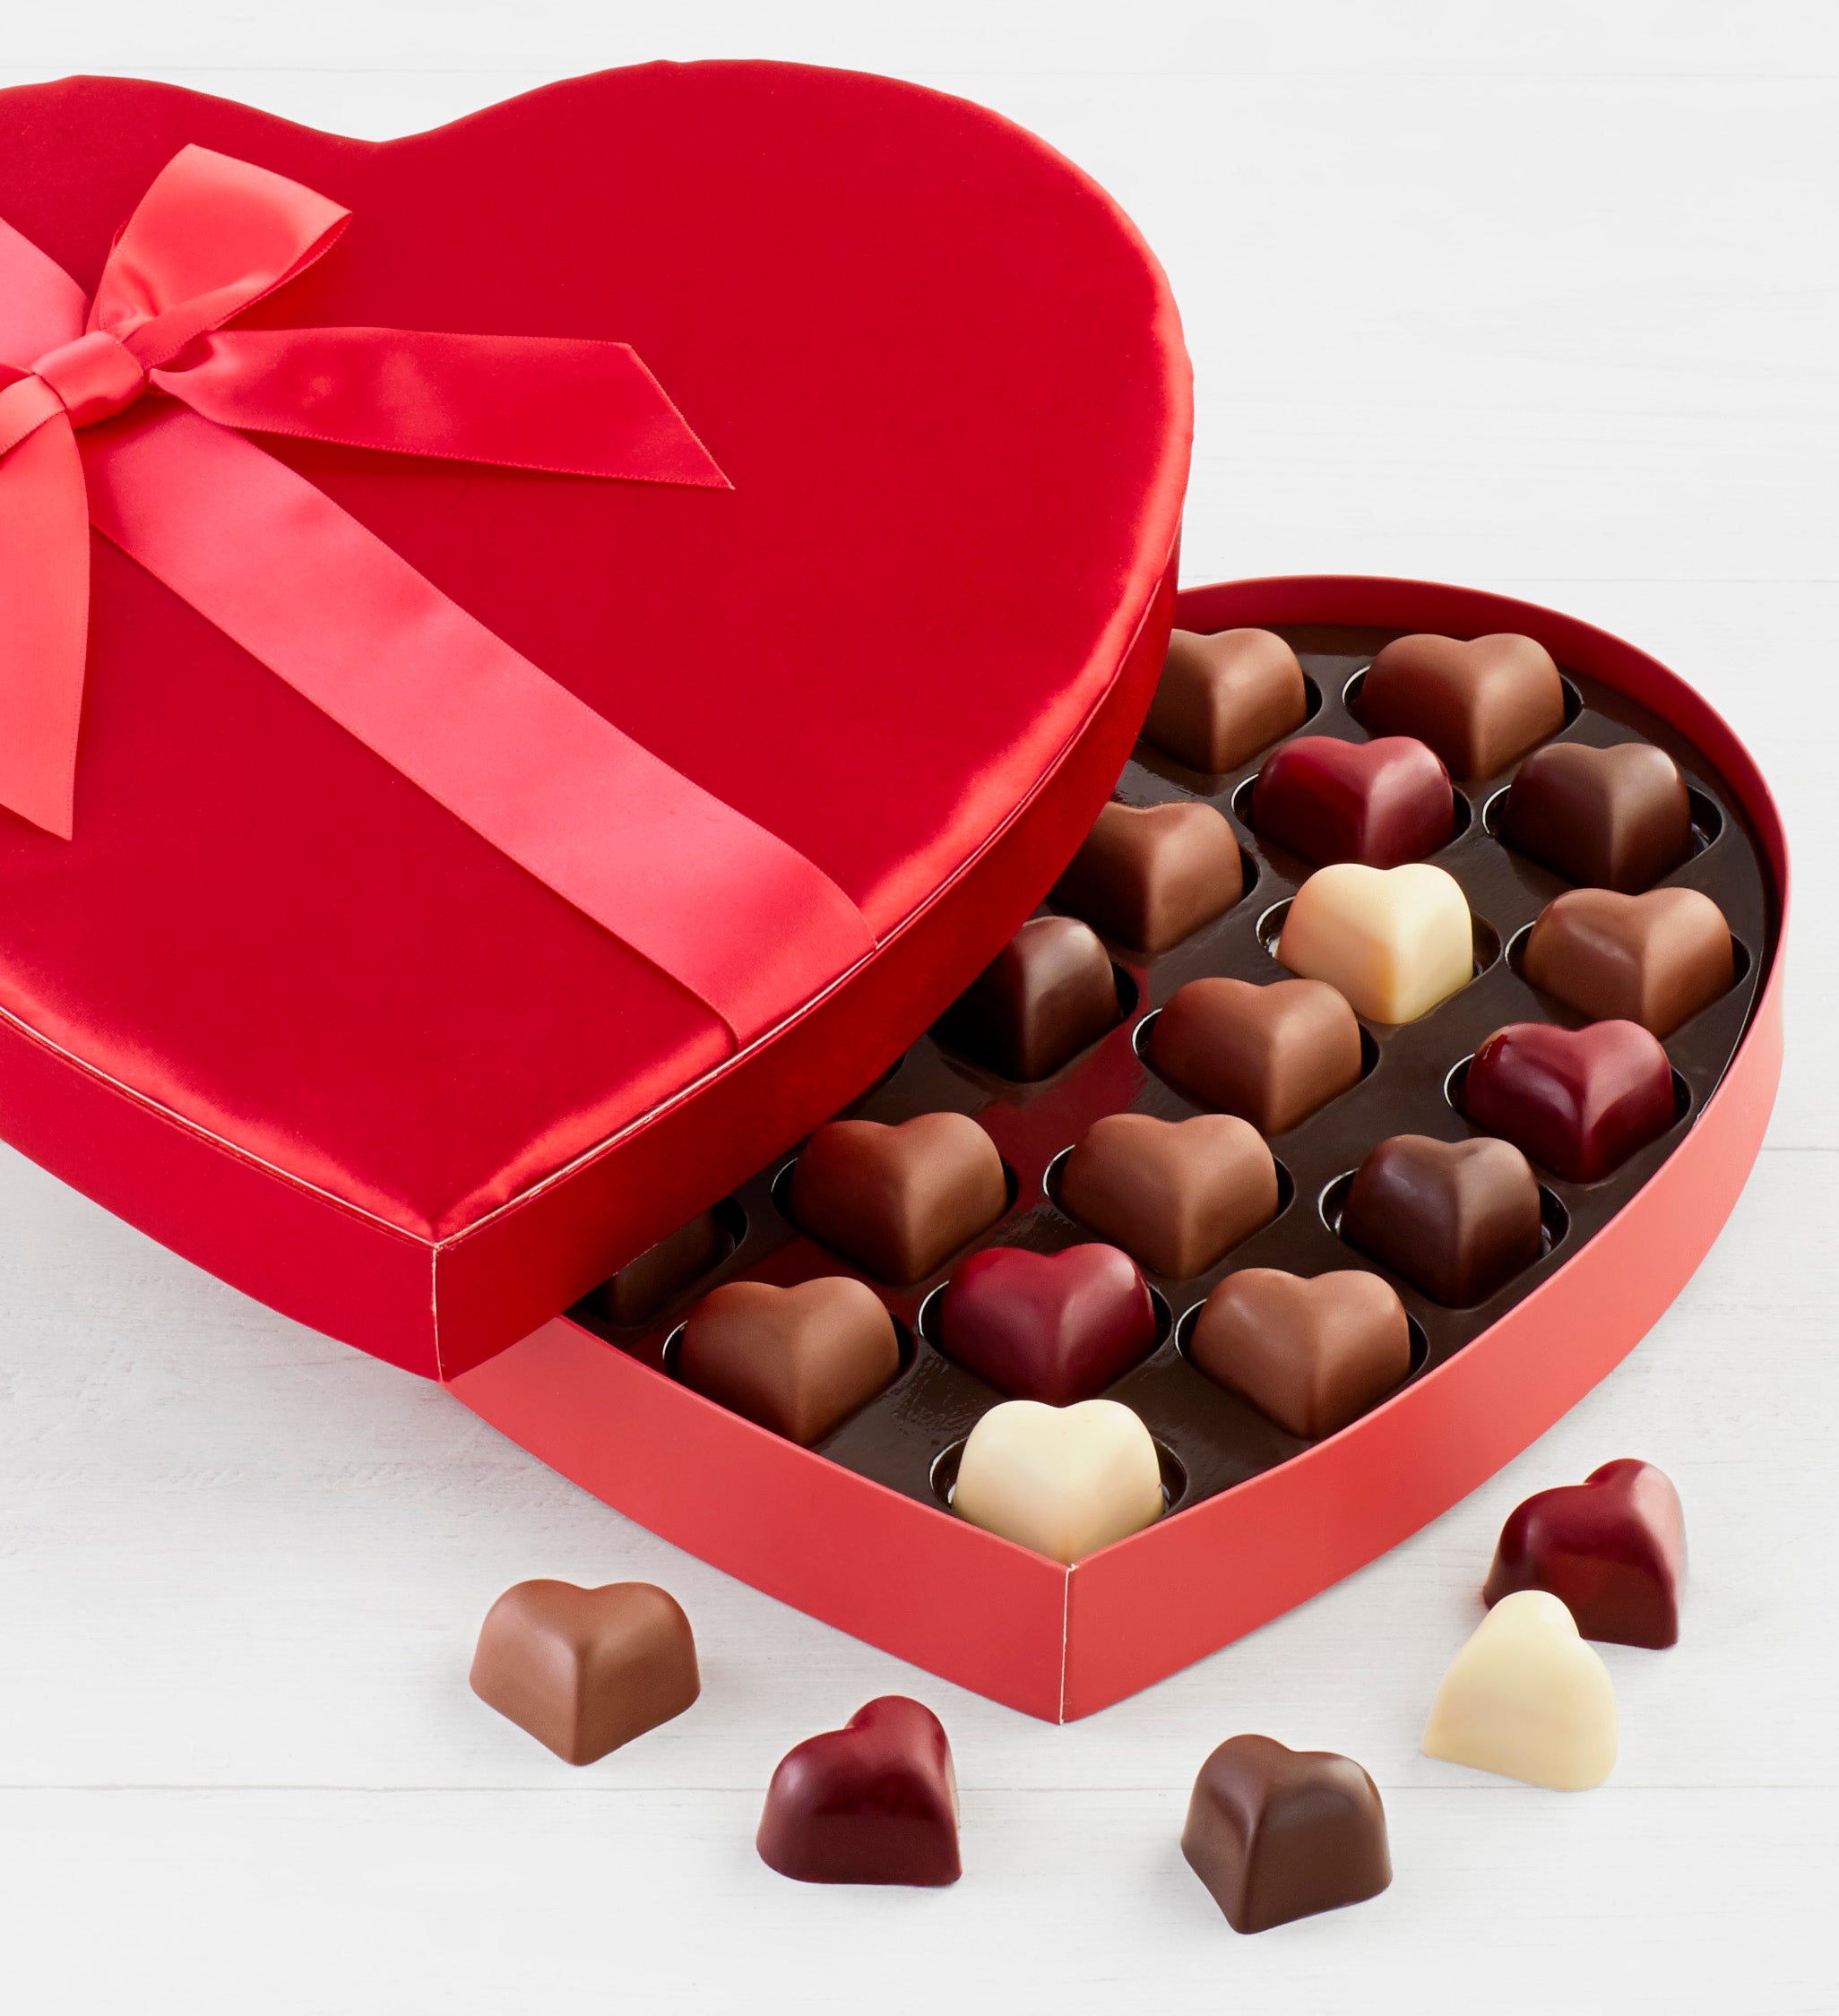 Chocolate Love Box